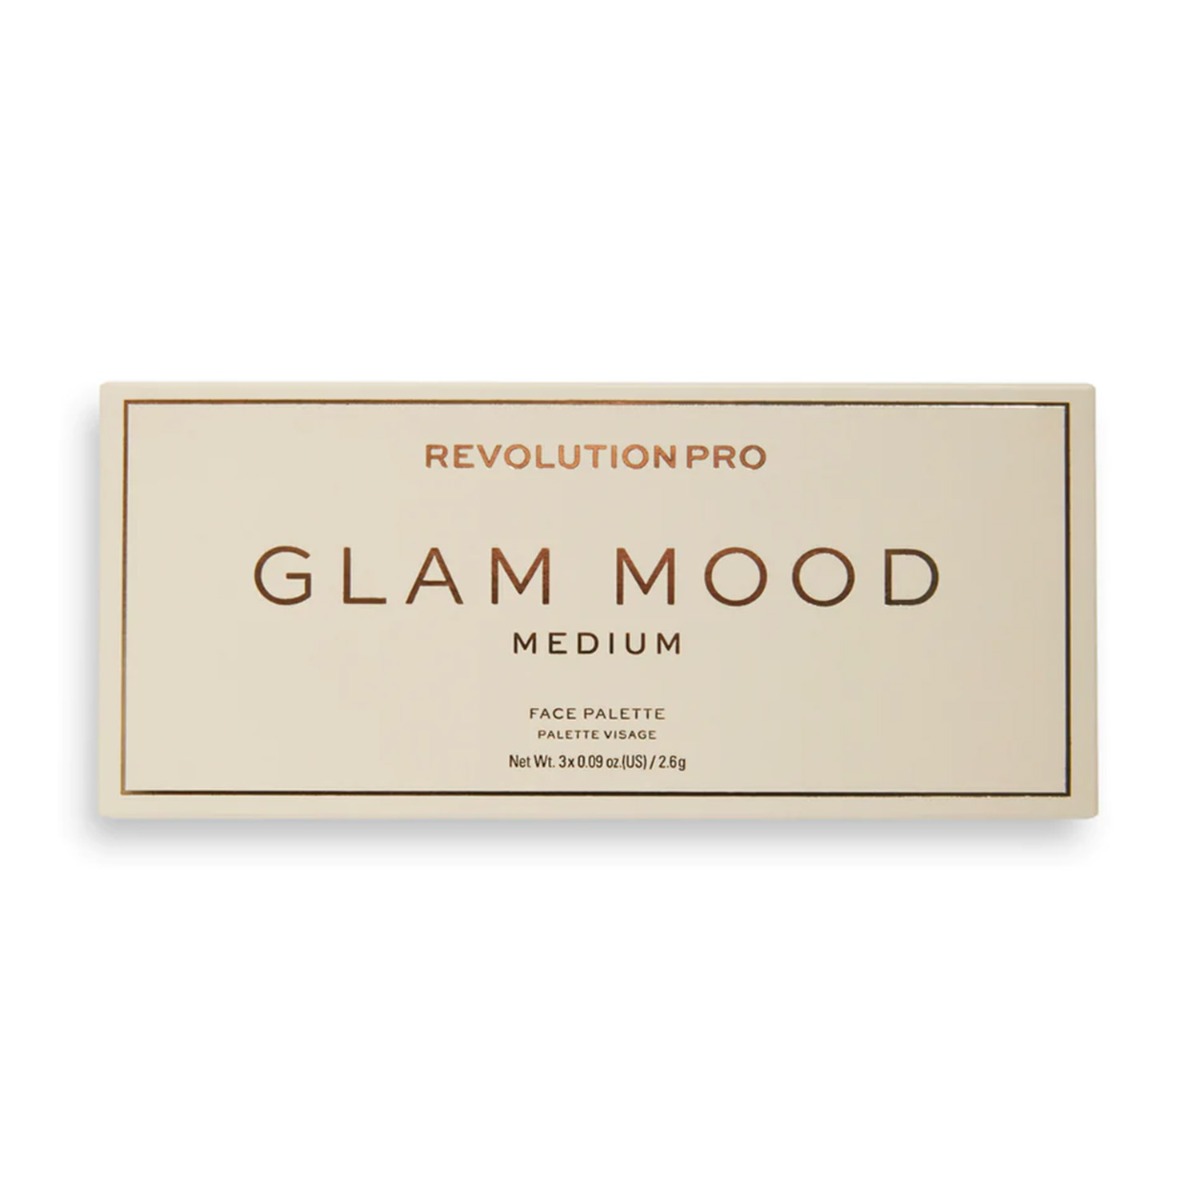 Revolution Pro Glam Mood Face Pallete - Medium, 7.8gm